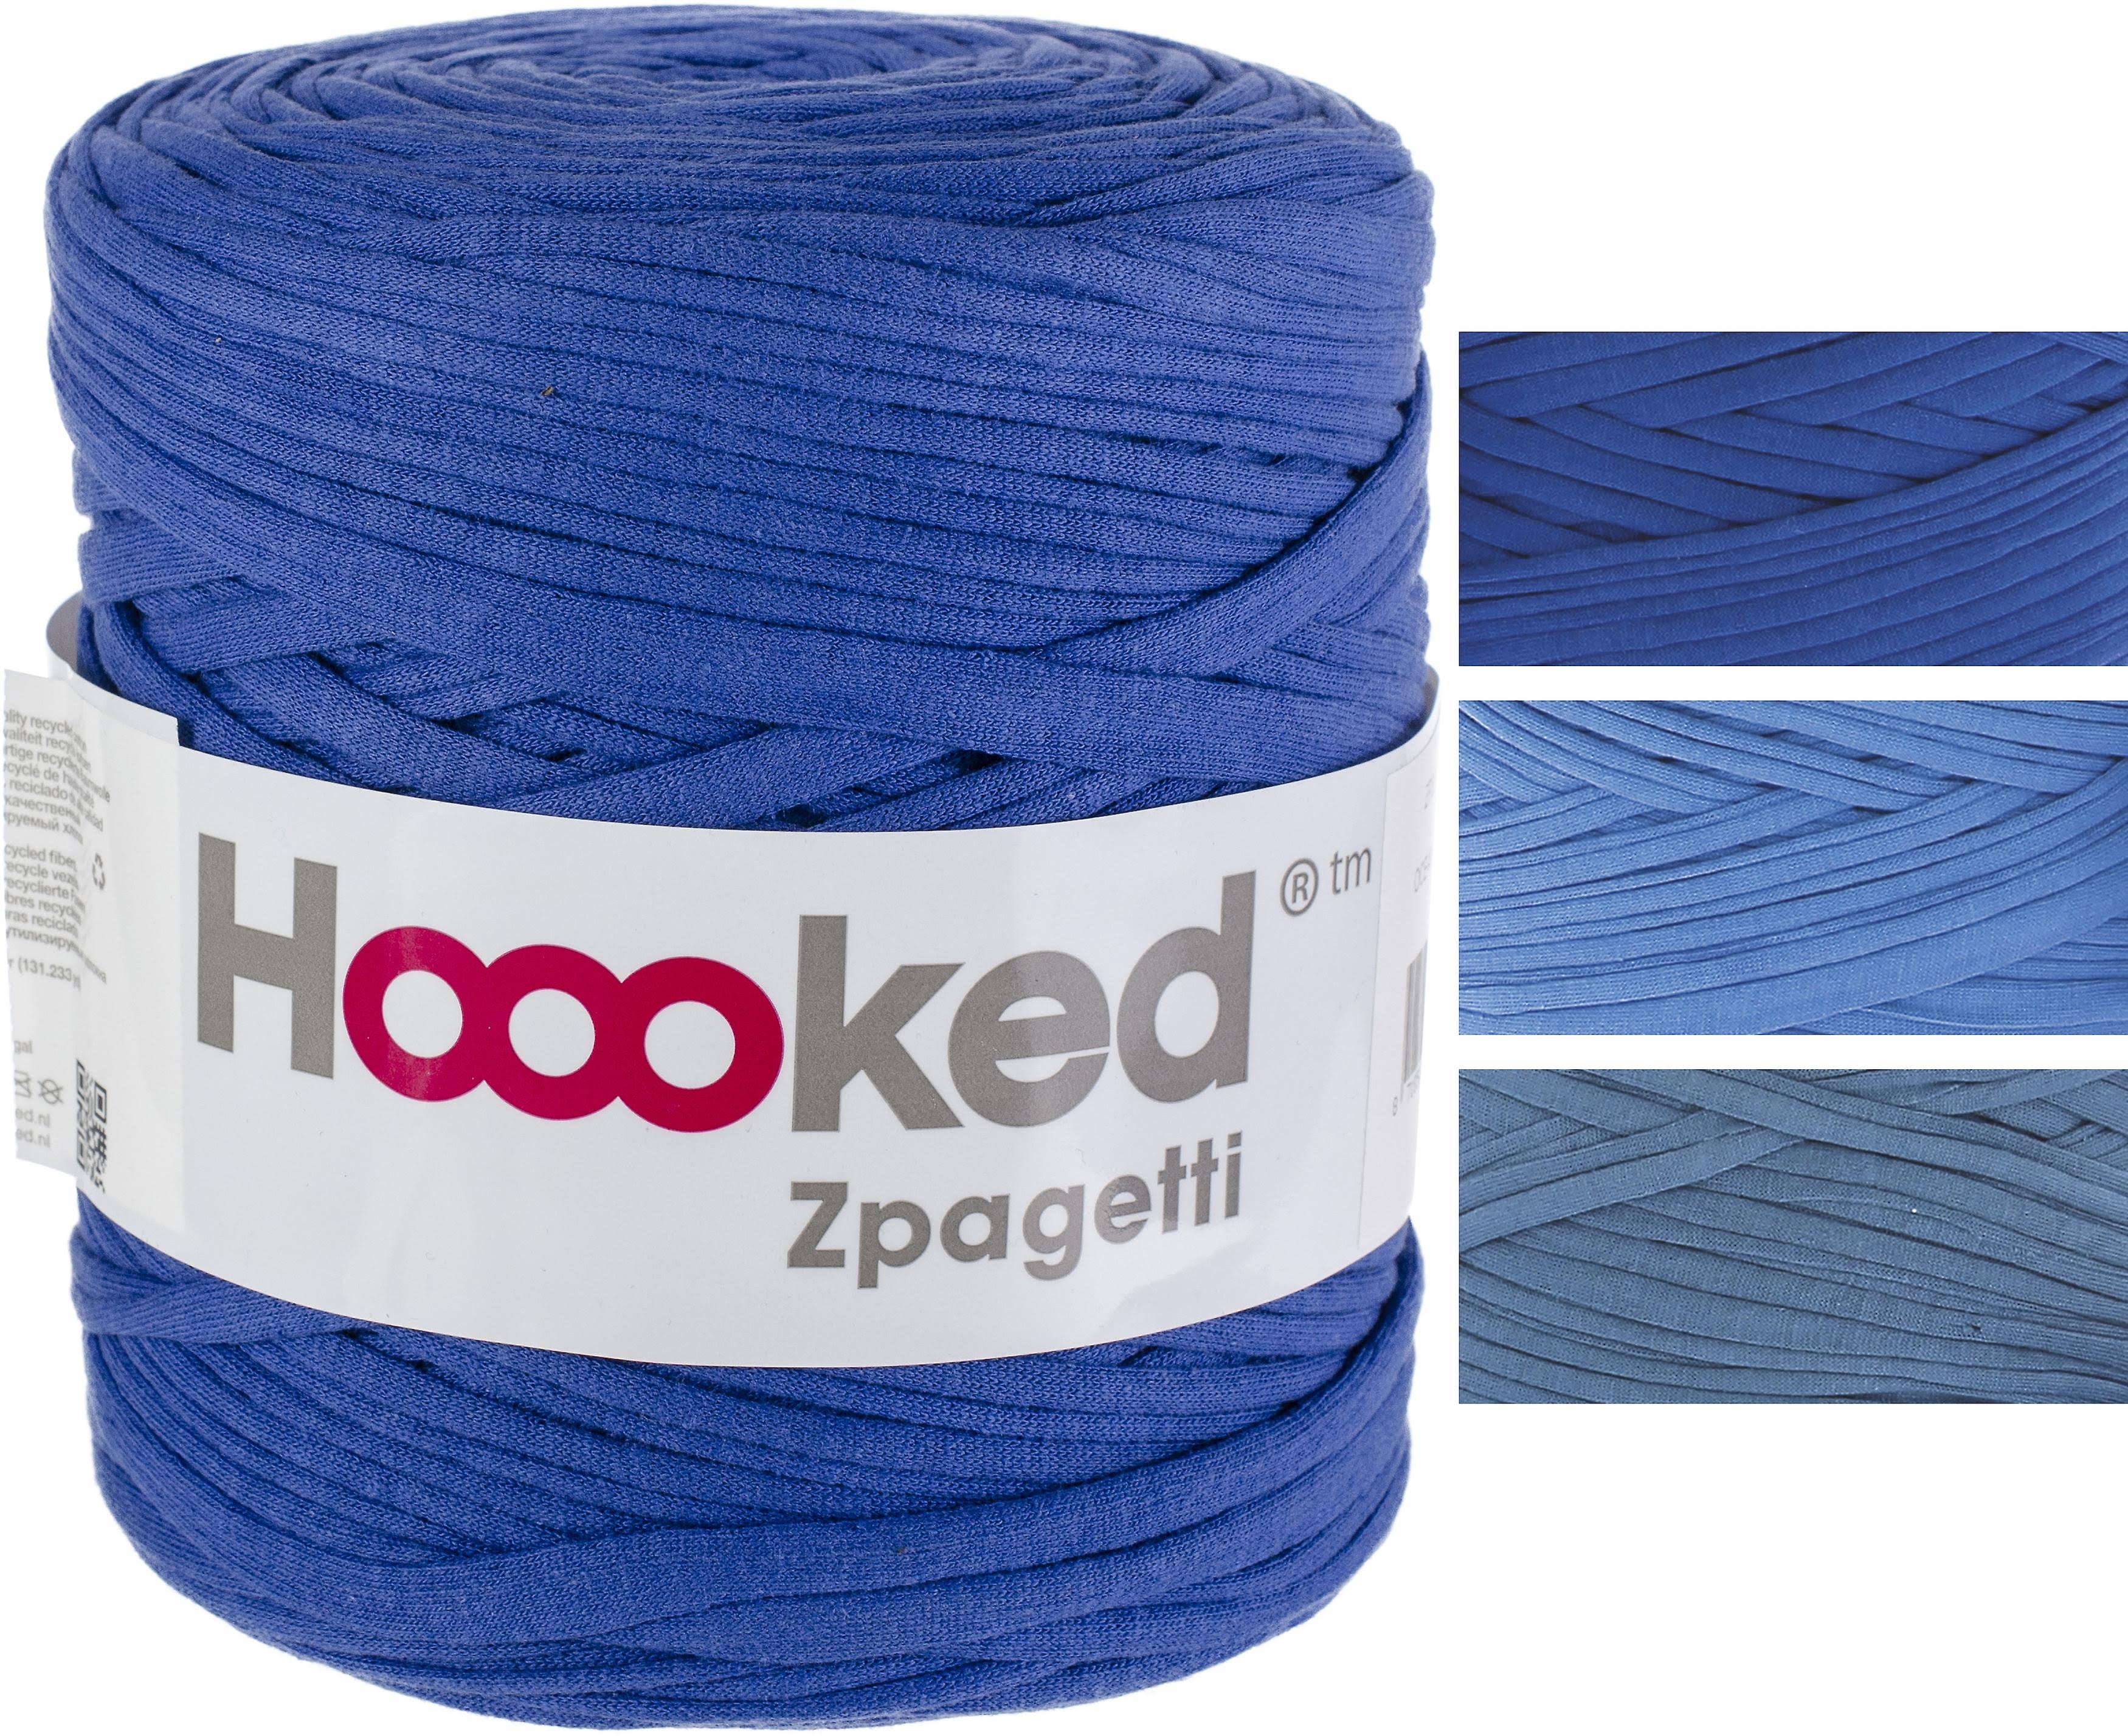 Hoooked Zpagetti Yarn - Ocean Blue - Mid Blue Shades*